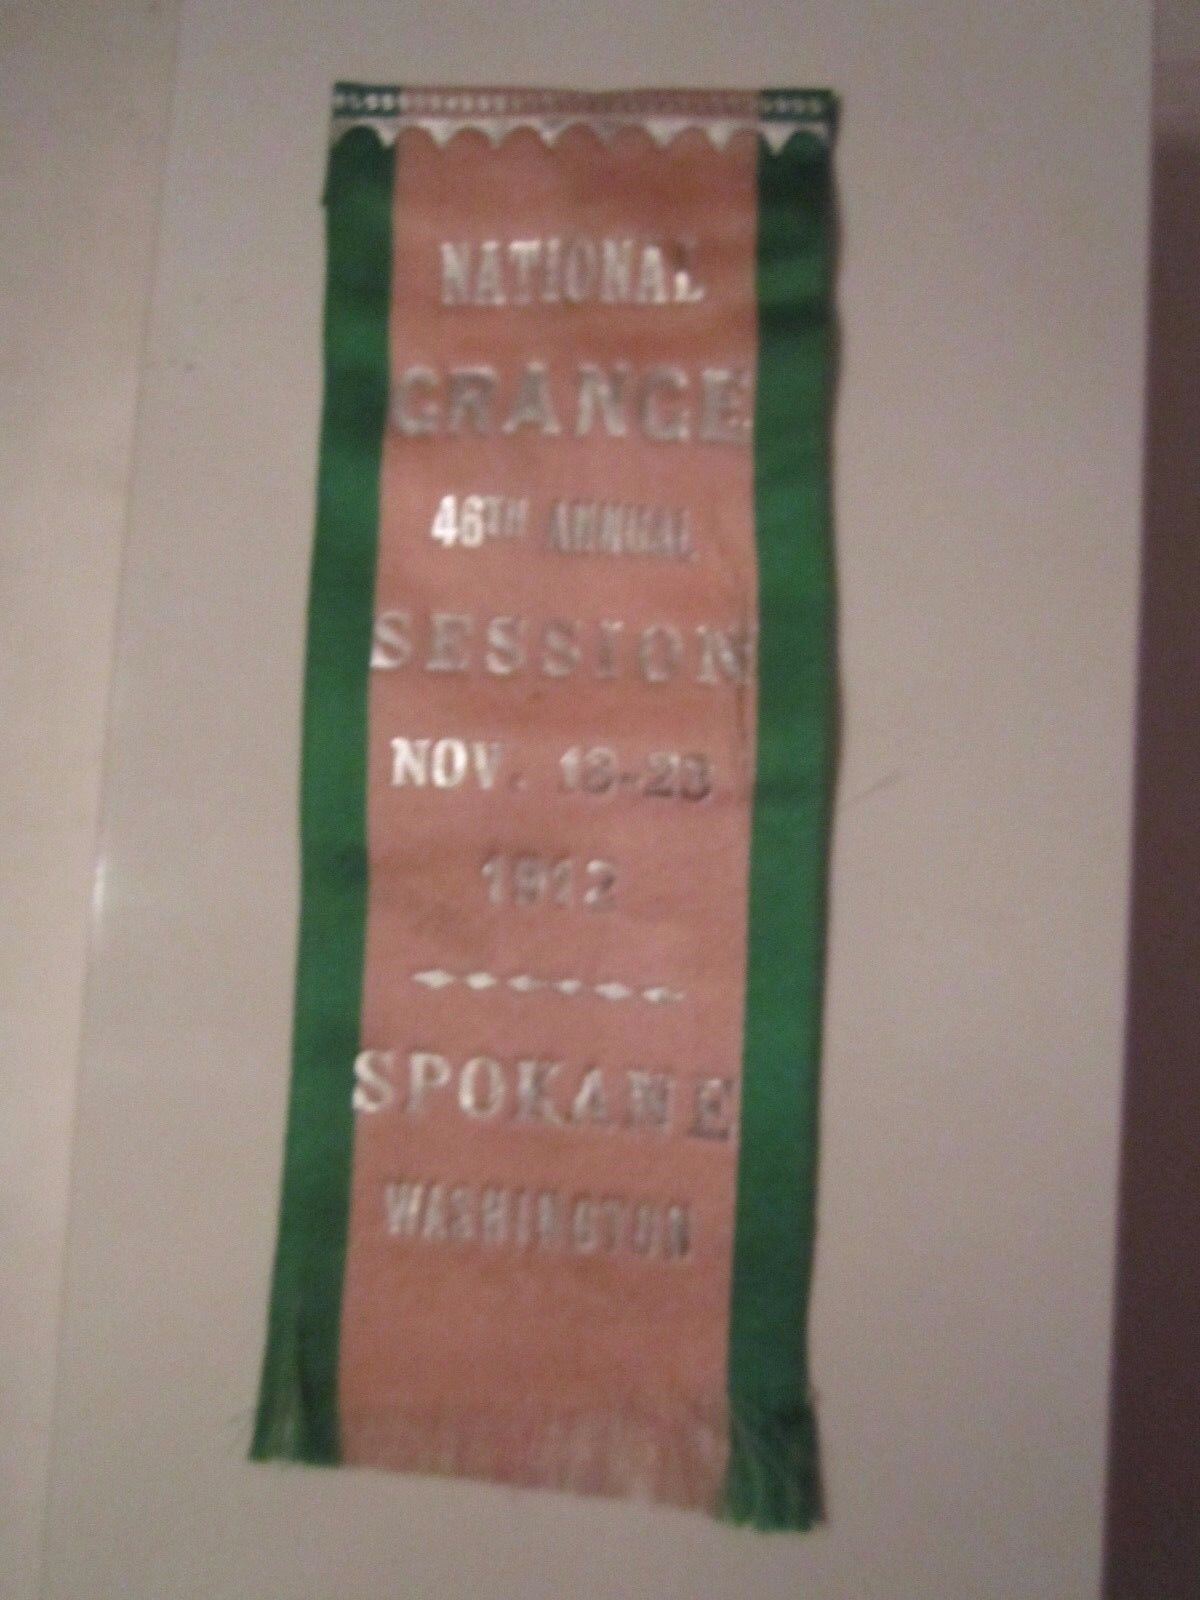 1912 NATIONAL GRANGE 46TH ANNUAL SESSION POLITICAL RIBBON - SPOKANE, WASH. OFCD